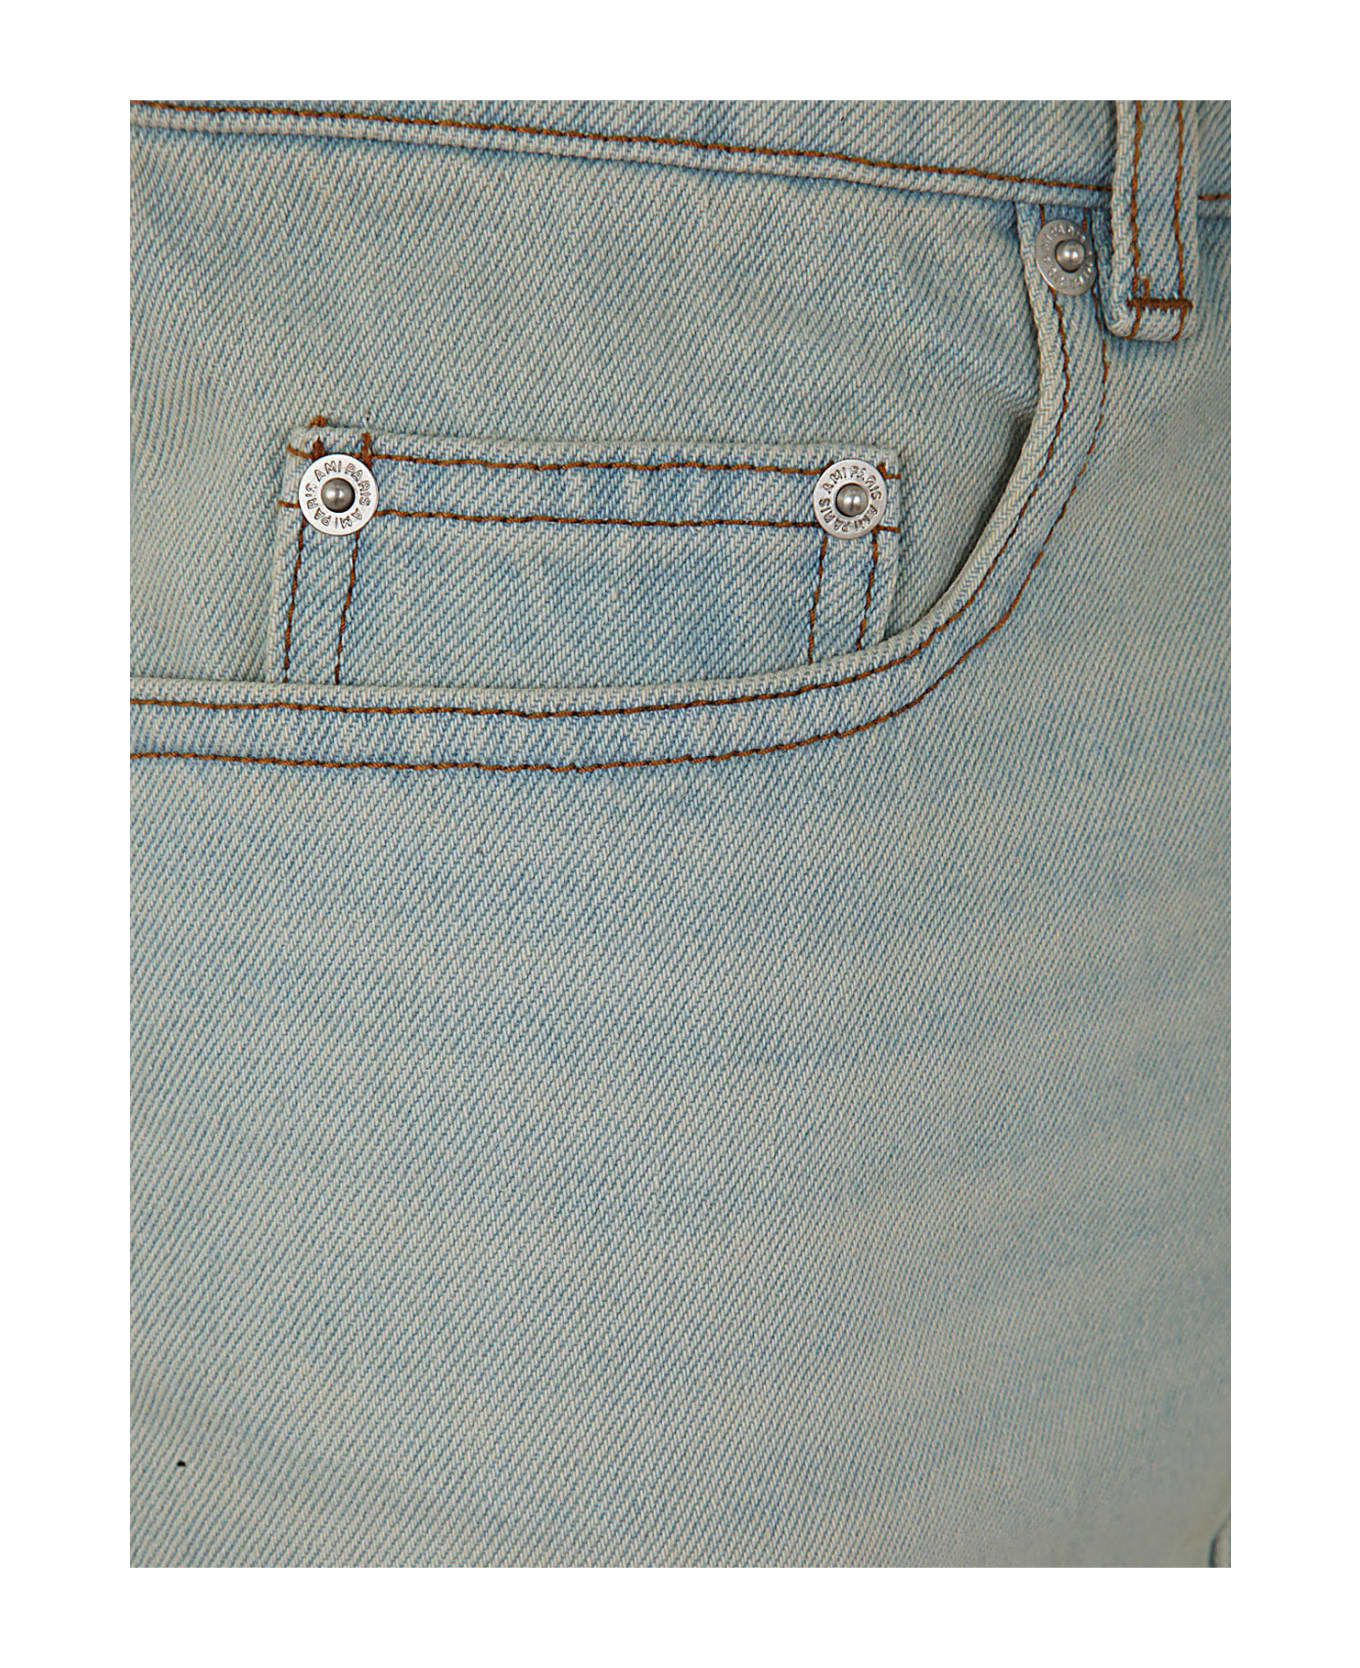 Ami Alexandre Mattiussi Five Pockets Mini Skirt - Bleu Javel スカート